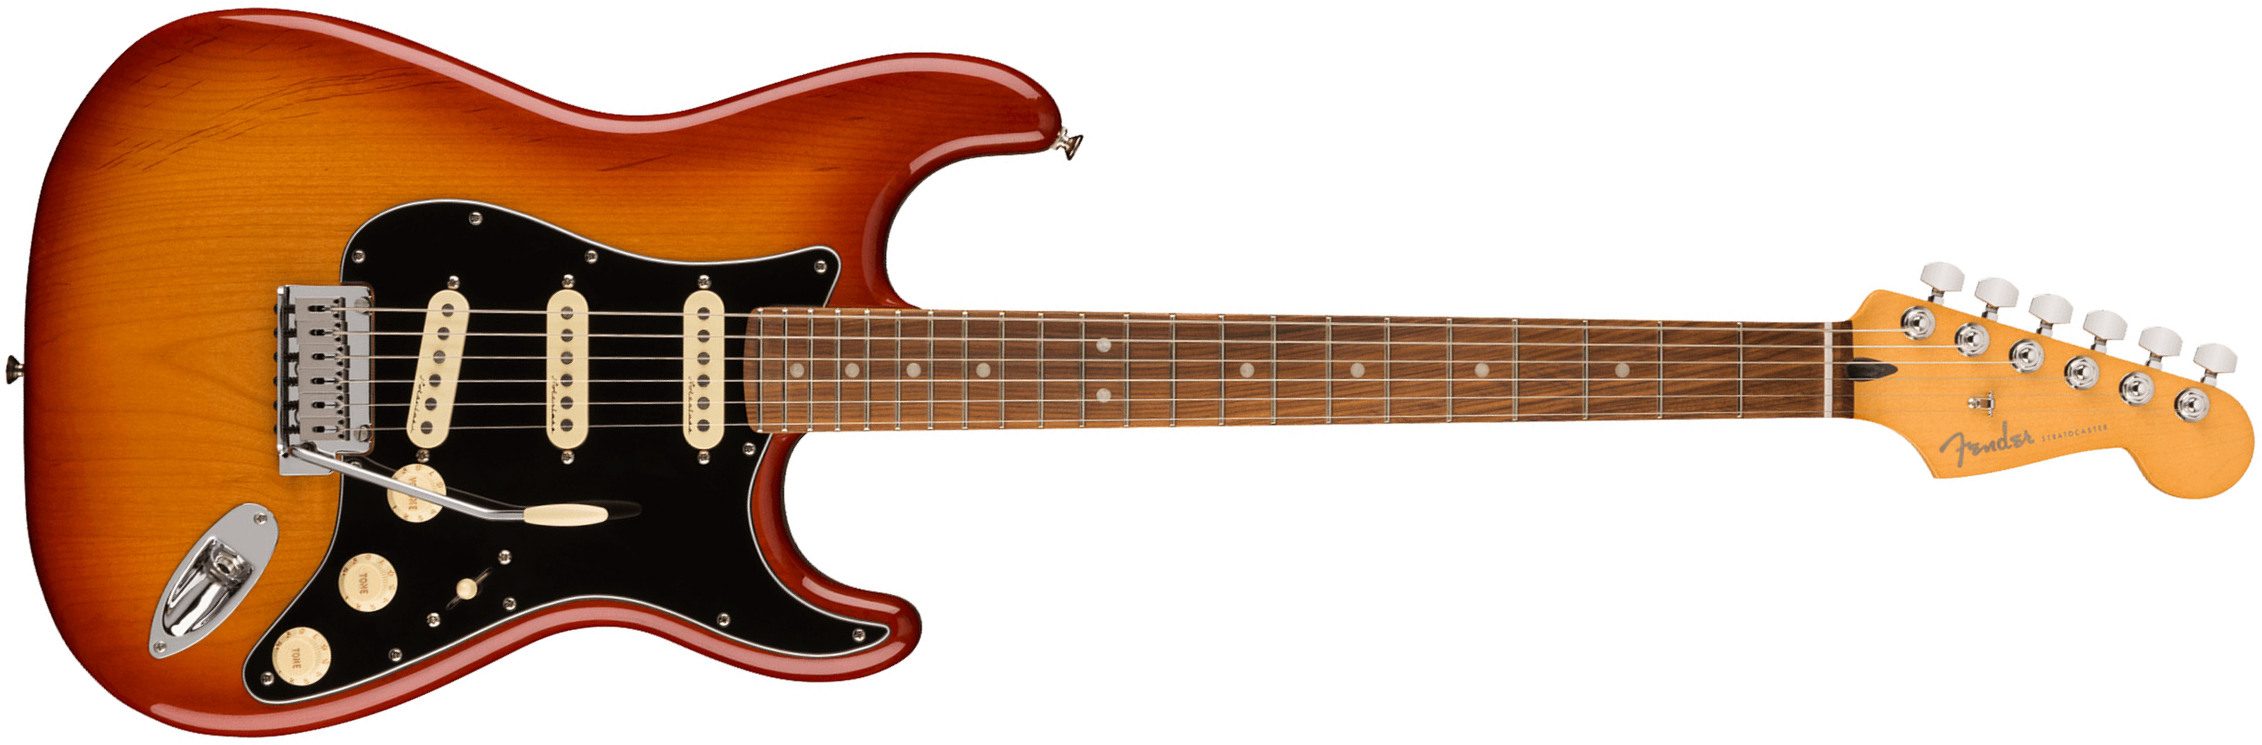 Fender Strat Player Plus Mex 2023 3s Trem Pf - Sienna Sunburst - E-Gitarre in Str-Form - Main picture